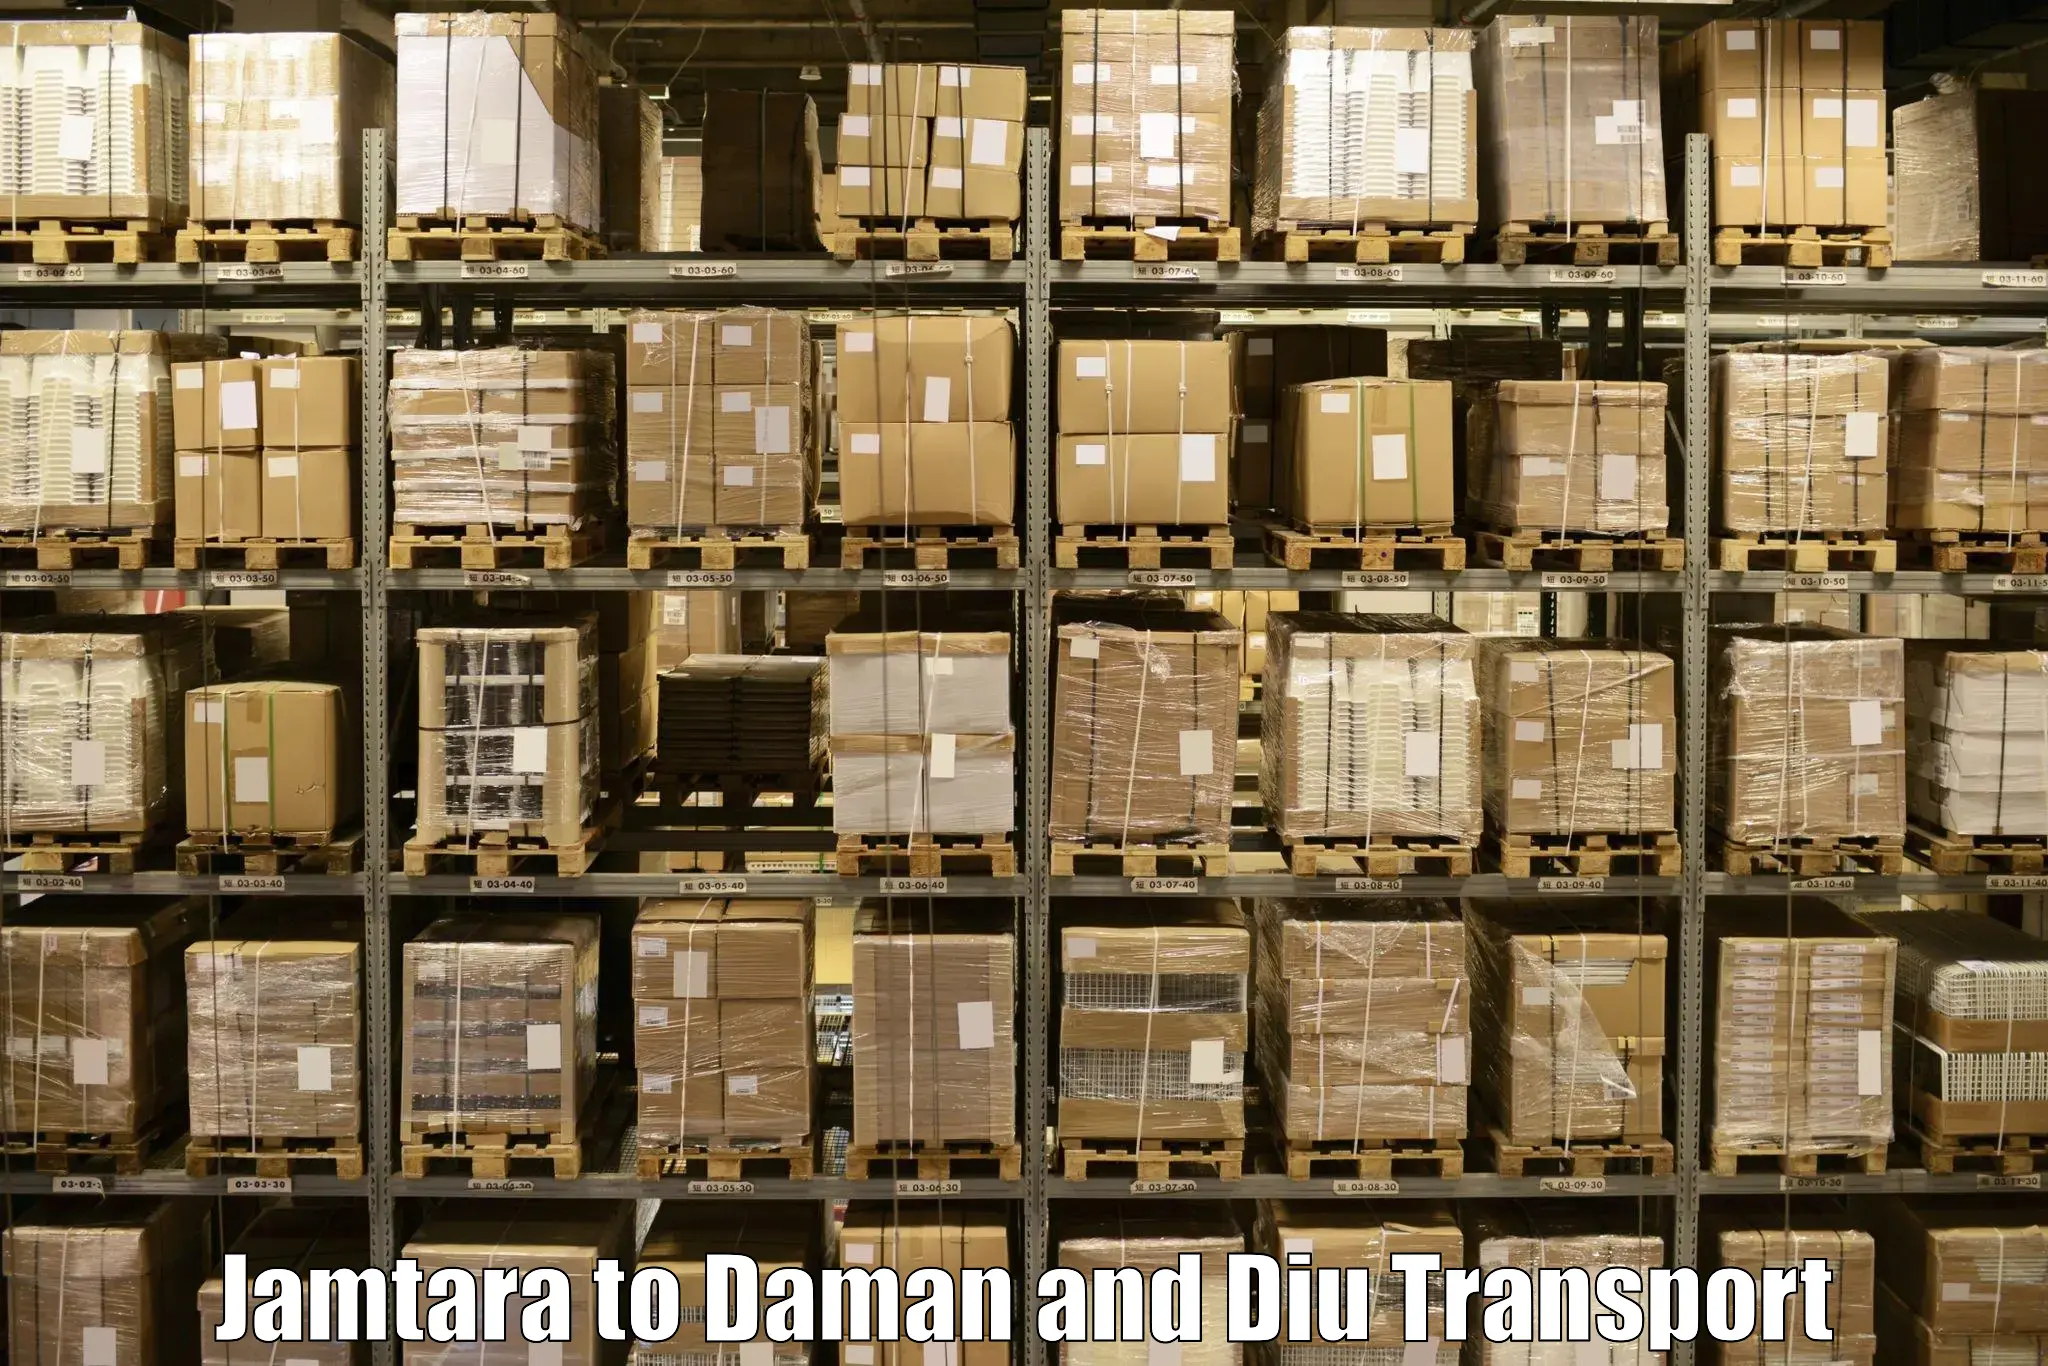 Truck transport companies in India Jamtara to Daman